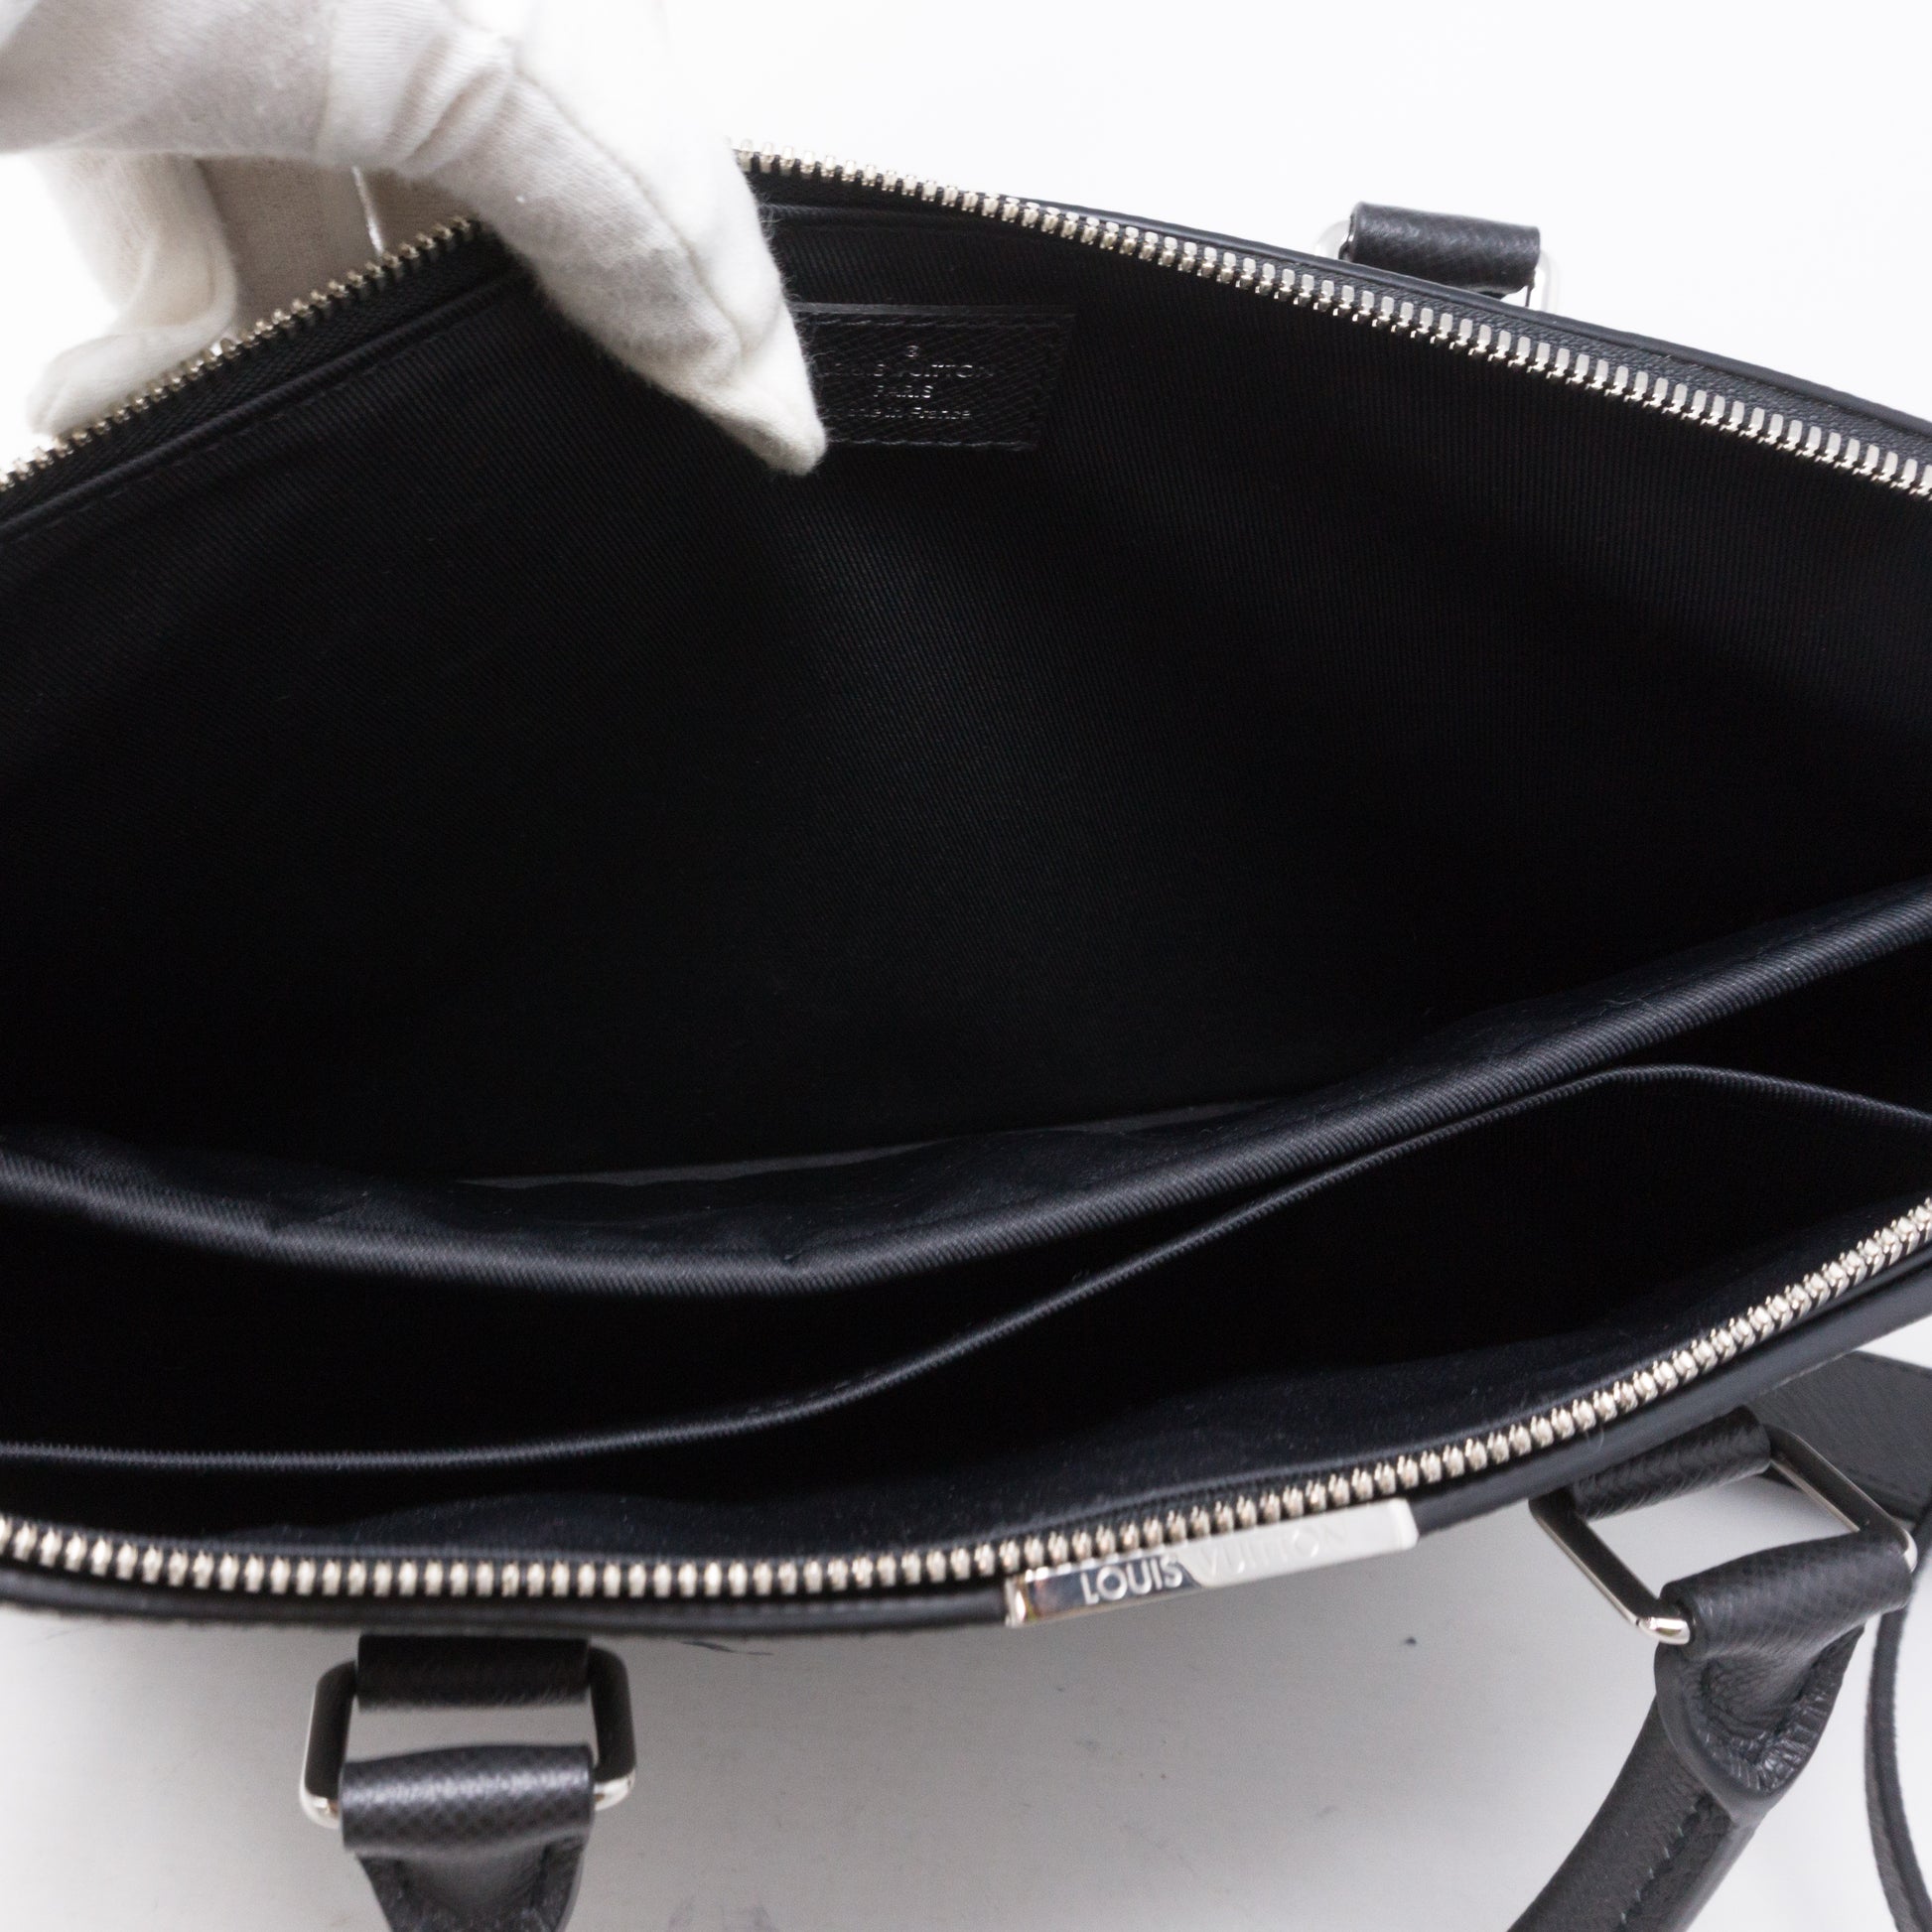 Louis Vuitton Anton Briefcase Taiga Leather 6179123